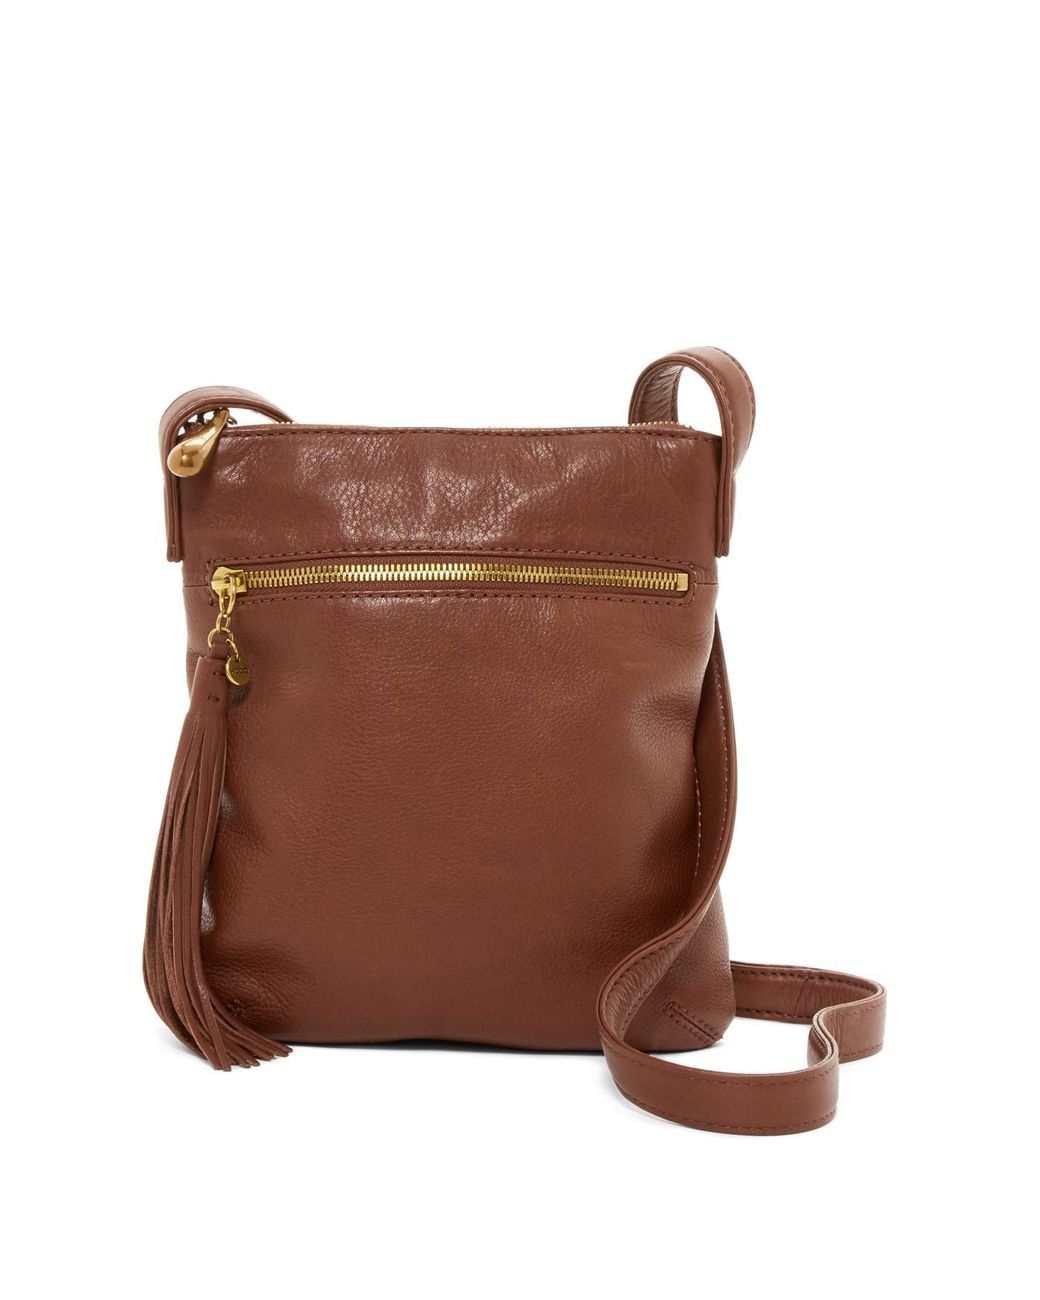 Hobo International Sarah Leather Crossbody Bag in Brown | Lyst